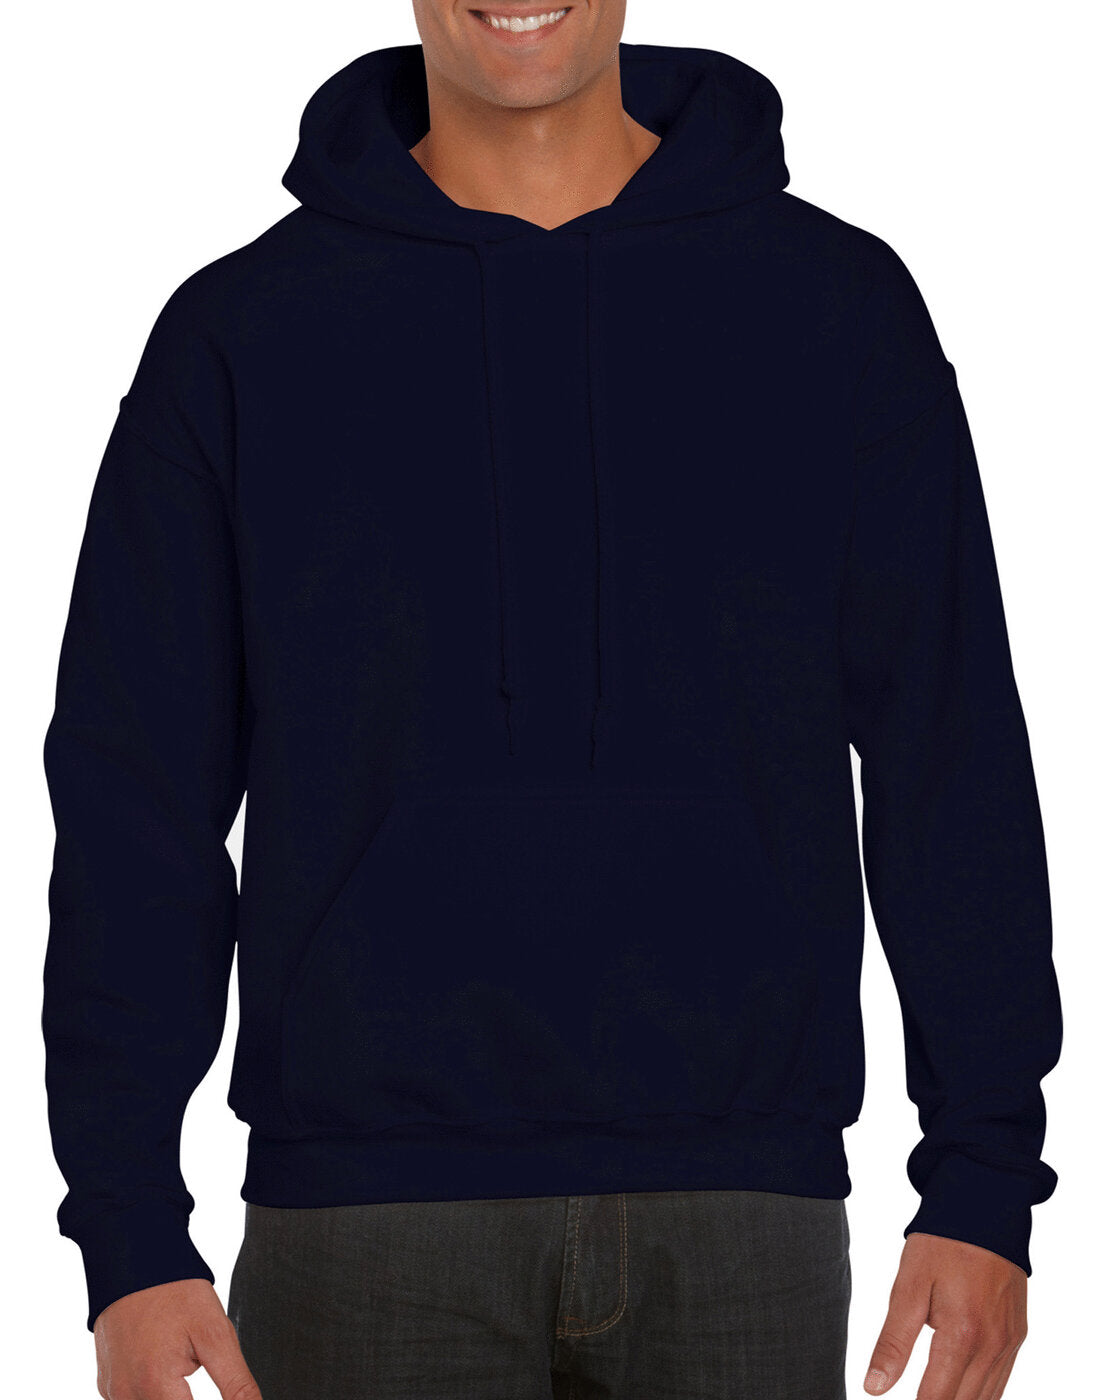 Gildan Dryblend Adult Hooded Sweatshirt - Navy